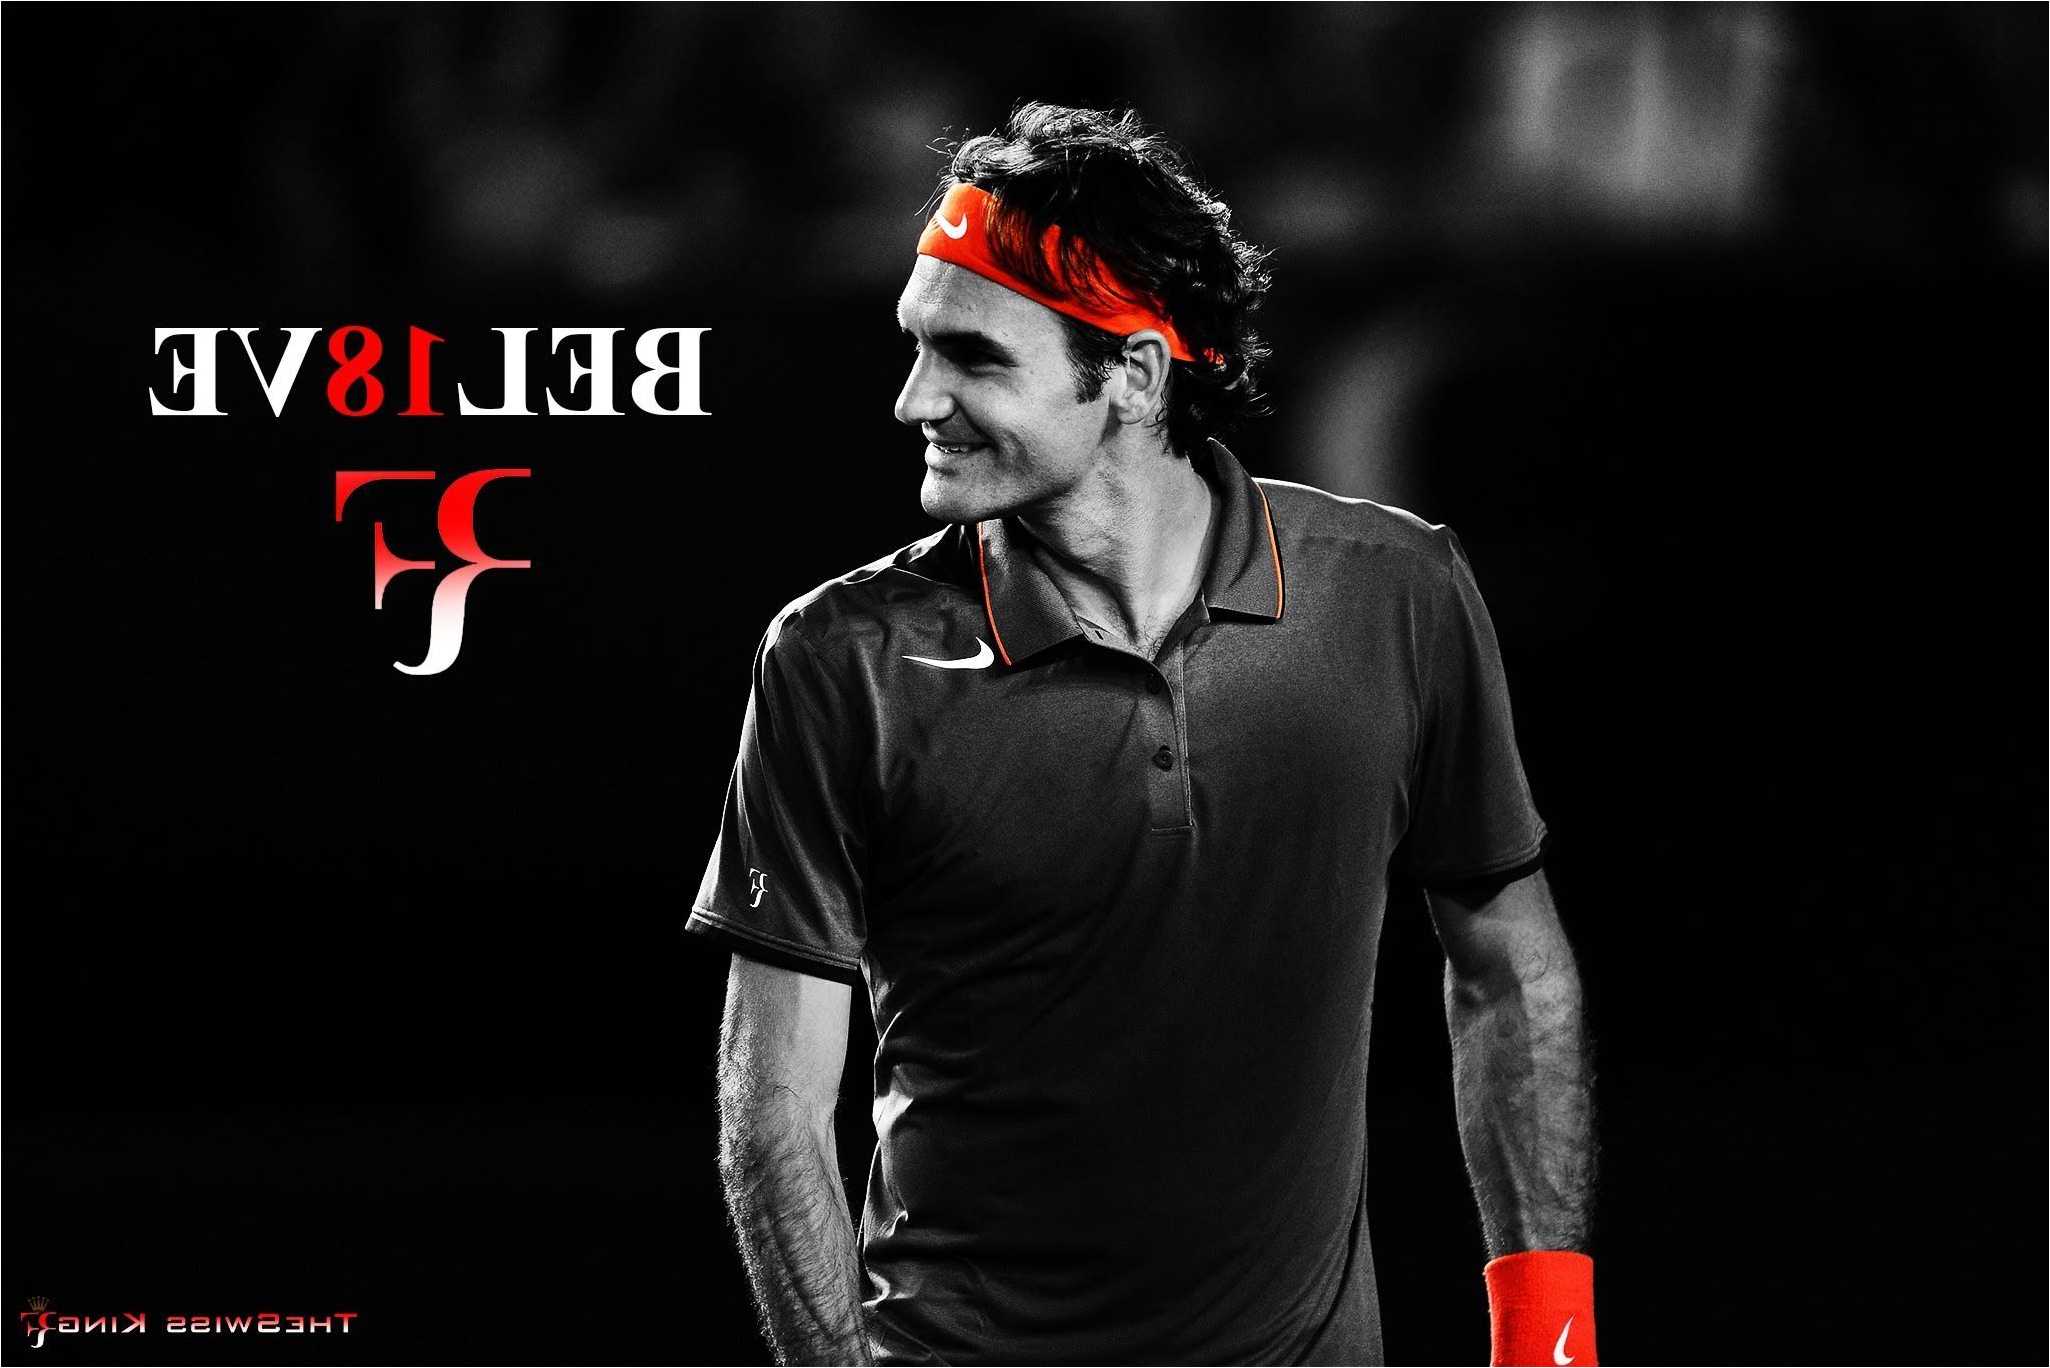 Roger Federer Wallpaper, Best & Inspirational High Quality